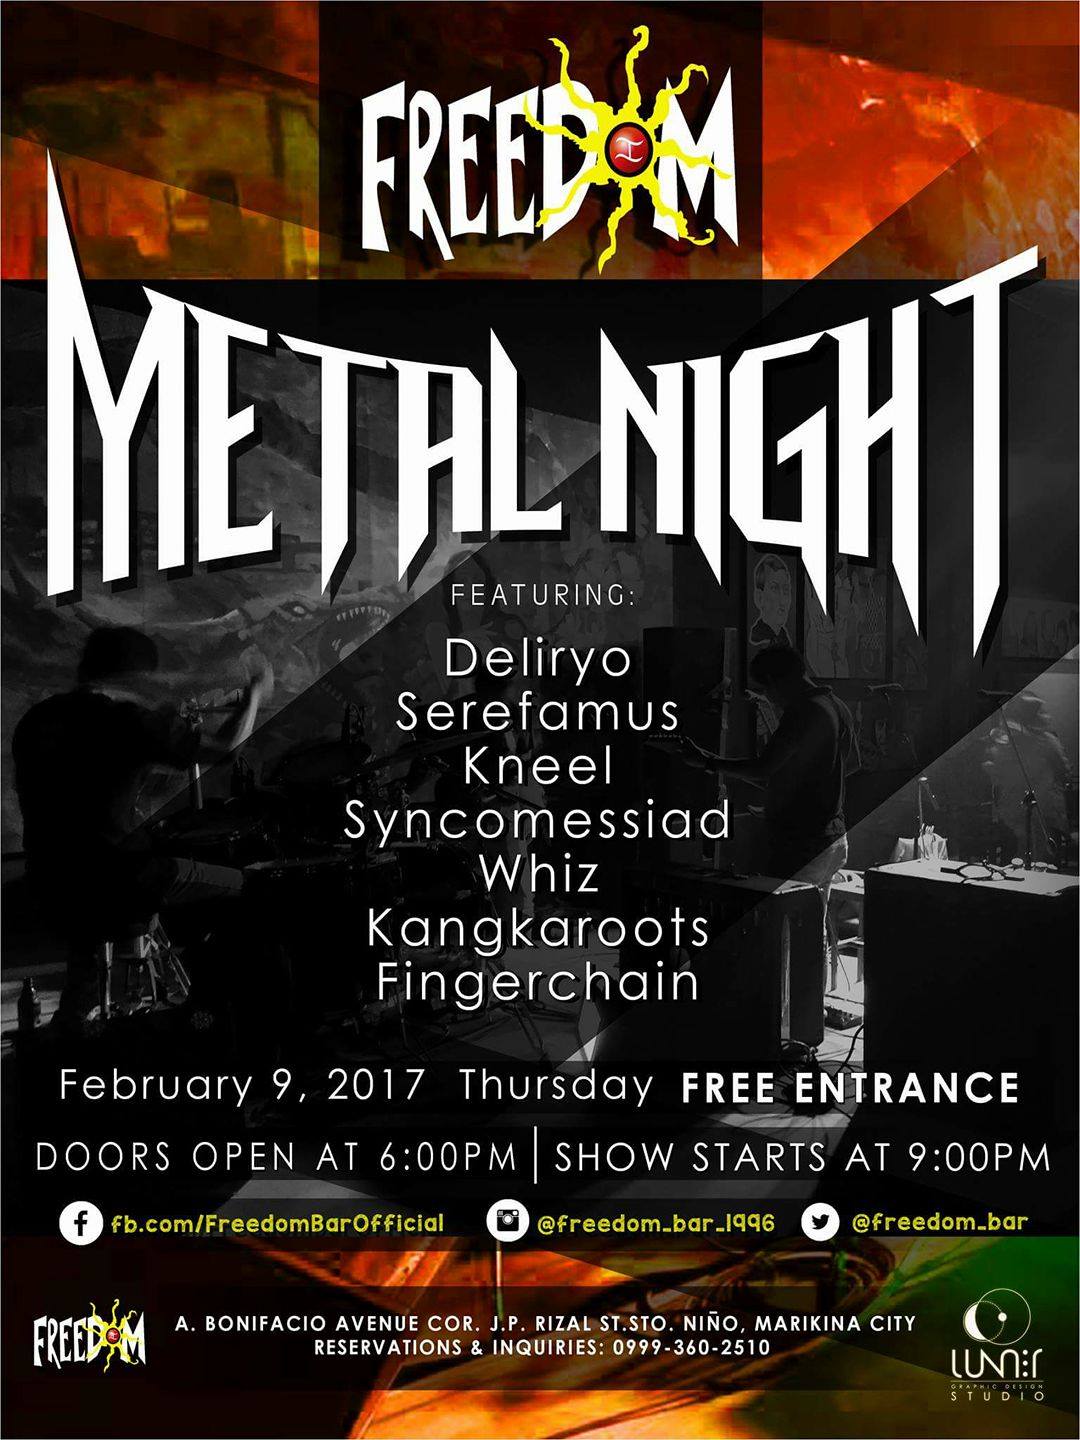 Pol Calinawan 16 hrs · Edited · Metal Night m/ February 09, 2017 Thursday. Free Entrance. featuring: DELIRYO, Serefamus, KNEEL, syncomessiad, Whiz, Kangkarots, Finger Chain. Freedom Bar. A. Bonifacio Avenue corner J.P. Rizal Street, Sto. Niño, Marikina City. 0999.3602510 ▲ http://bandstand.ph/2017/02/09/metal-night-2-9-17/ — with Zyx Gisap and McQueen de Guzman at Freedom Bar Events.